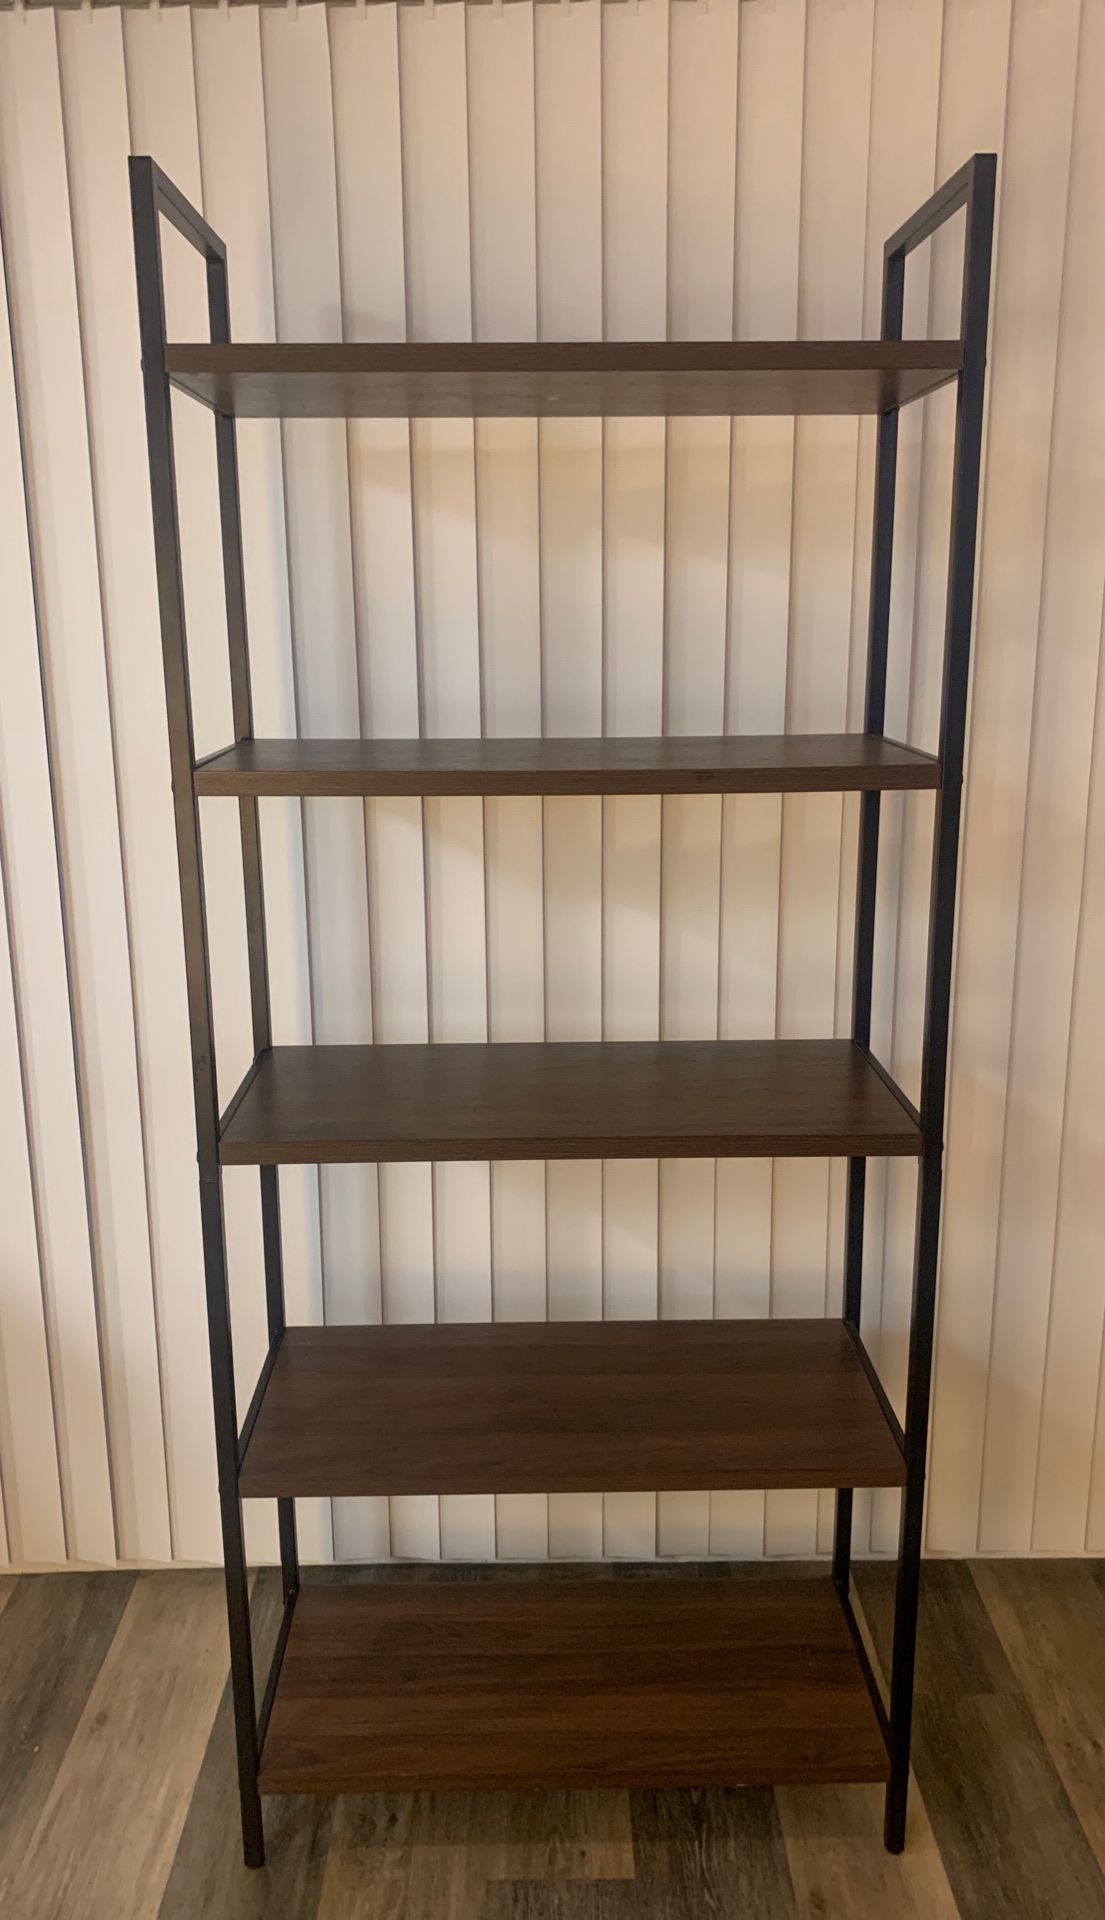 5 Shelf Ladder Bookshelf